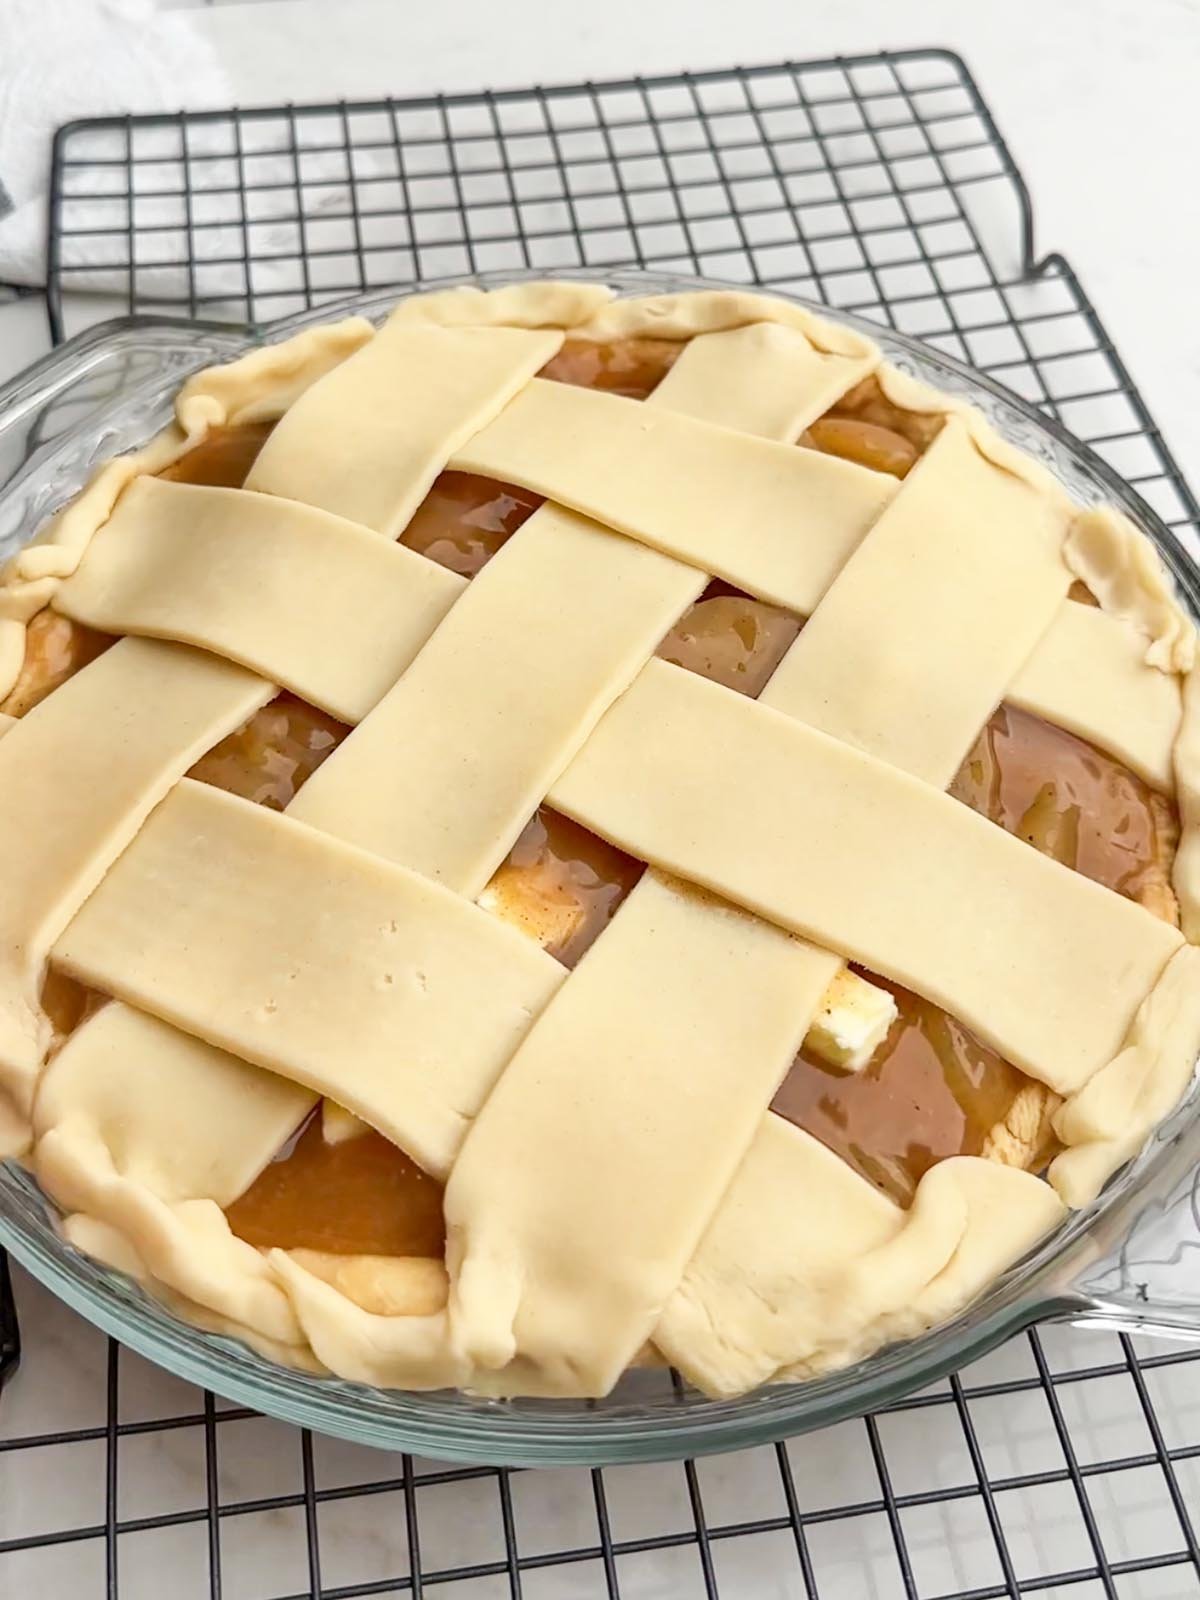 Completed lattice top crust on apple pie.